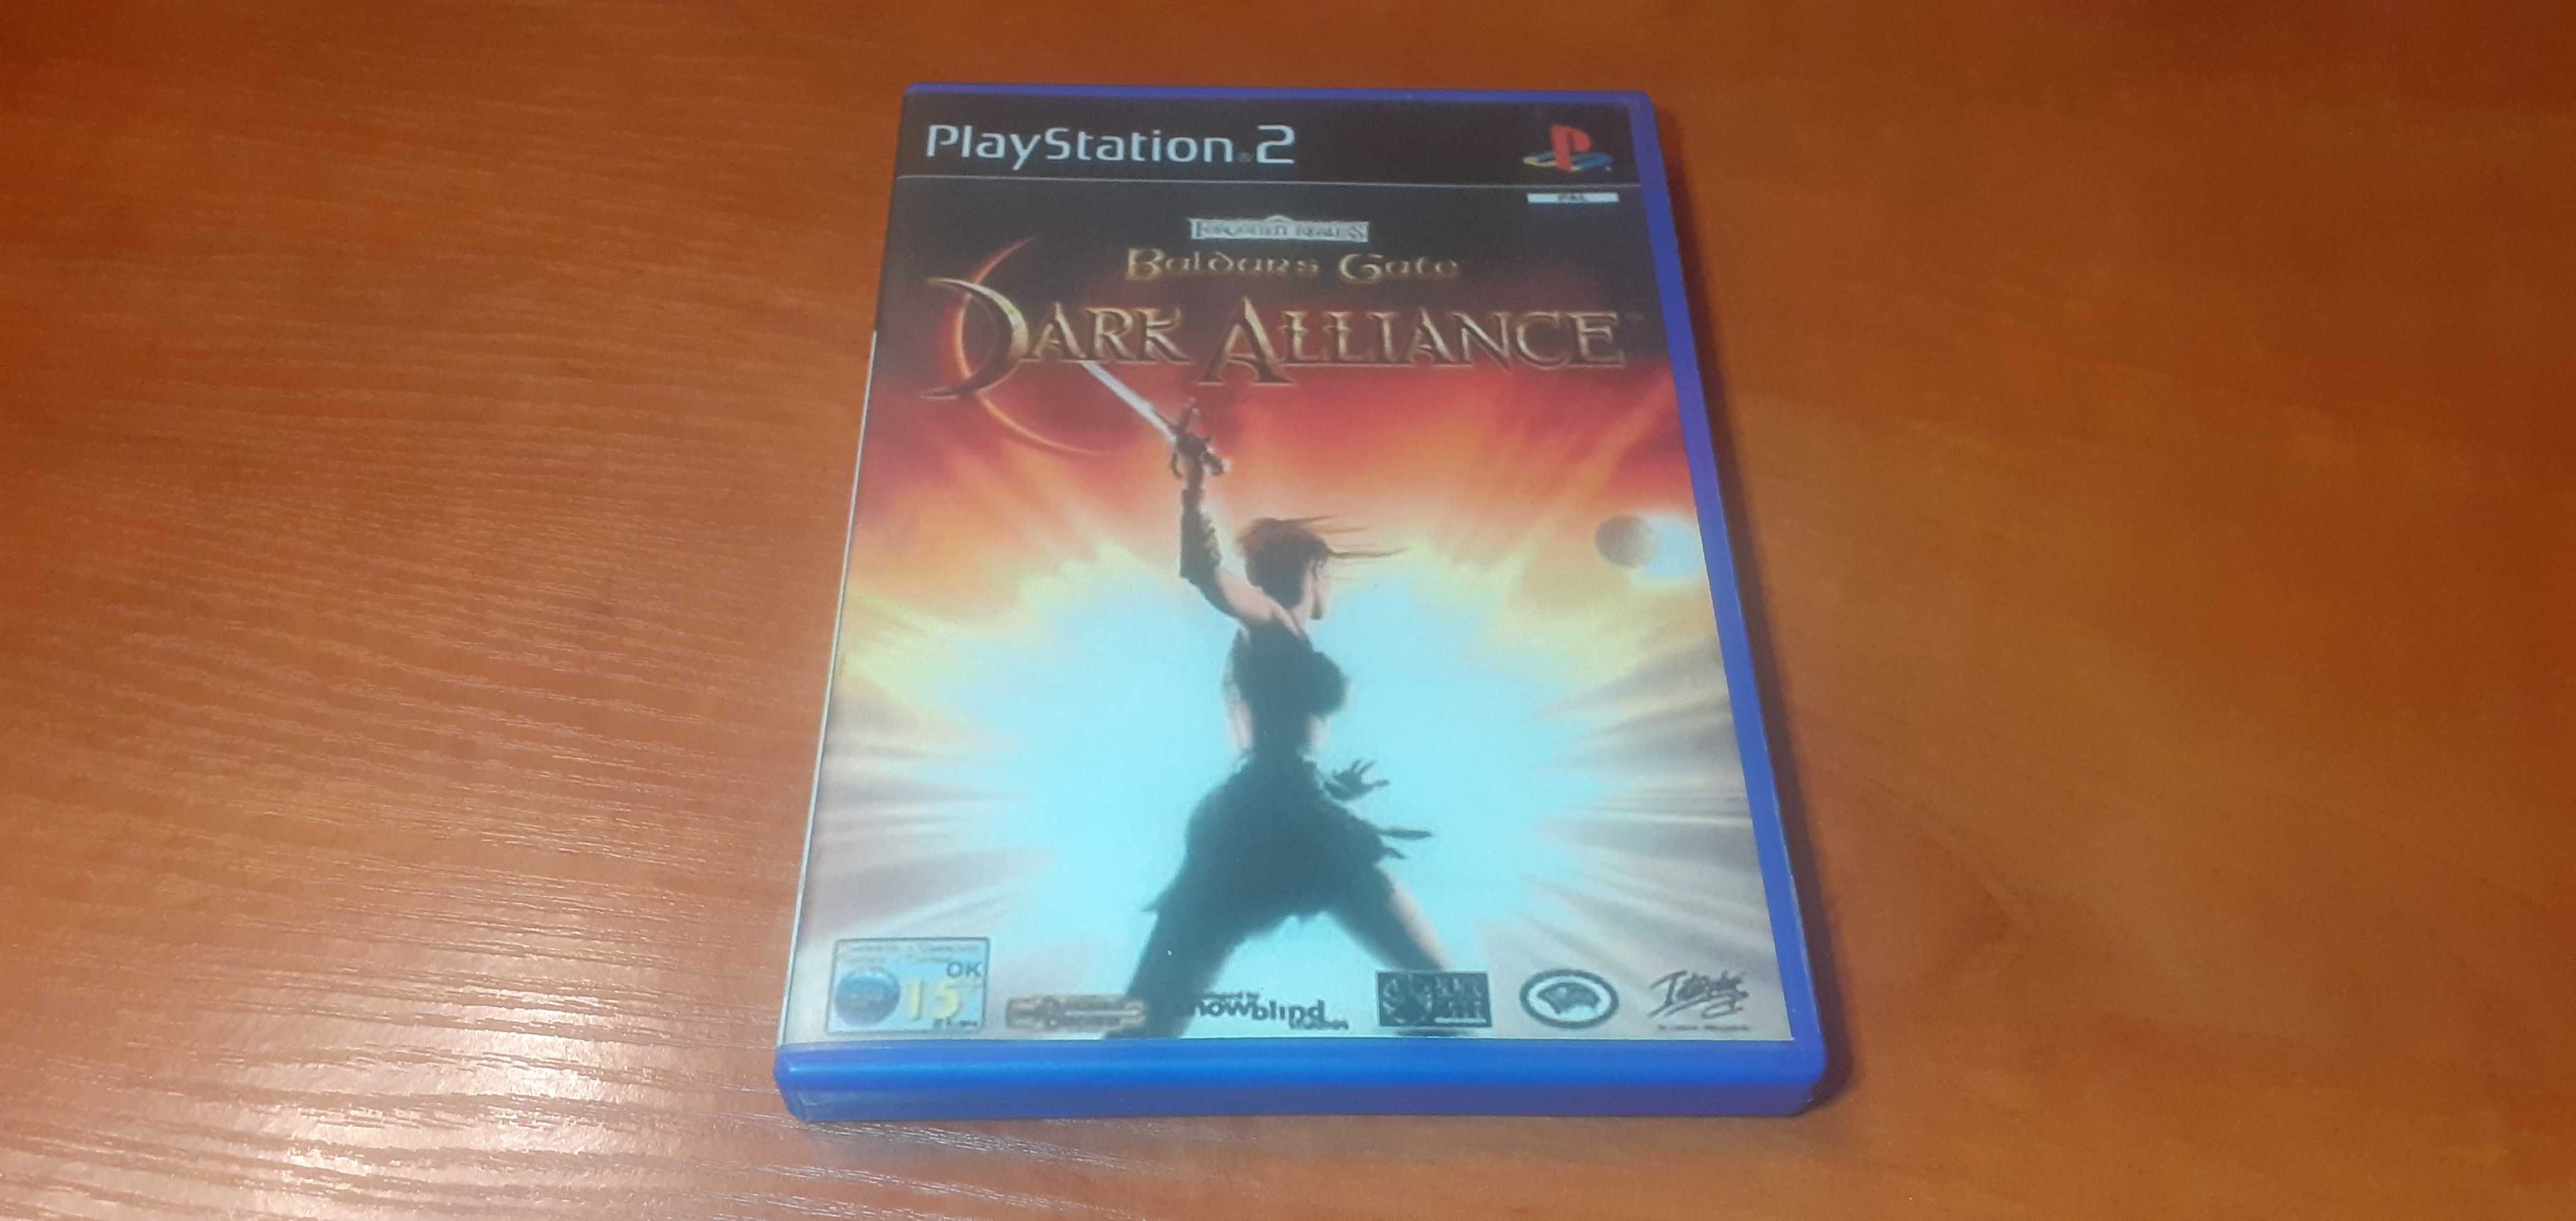 Baldur's Gate Dark Aliance Playstation2 BDB stan